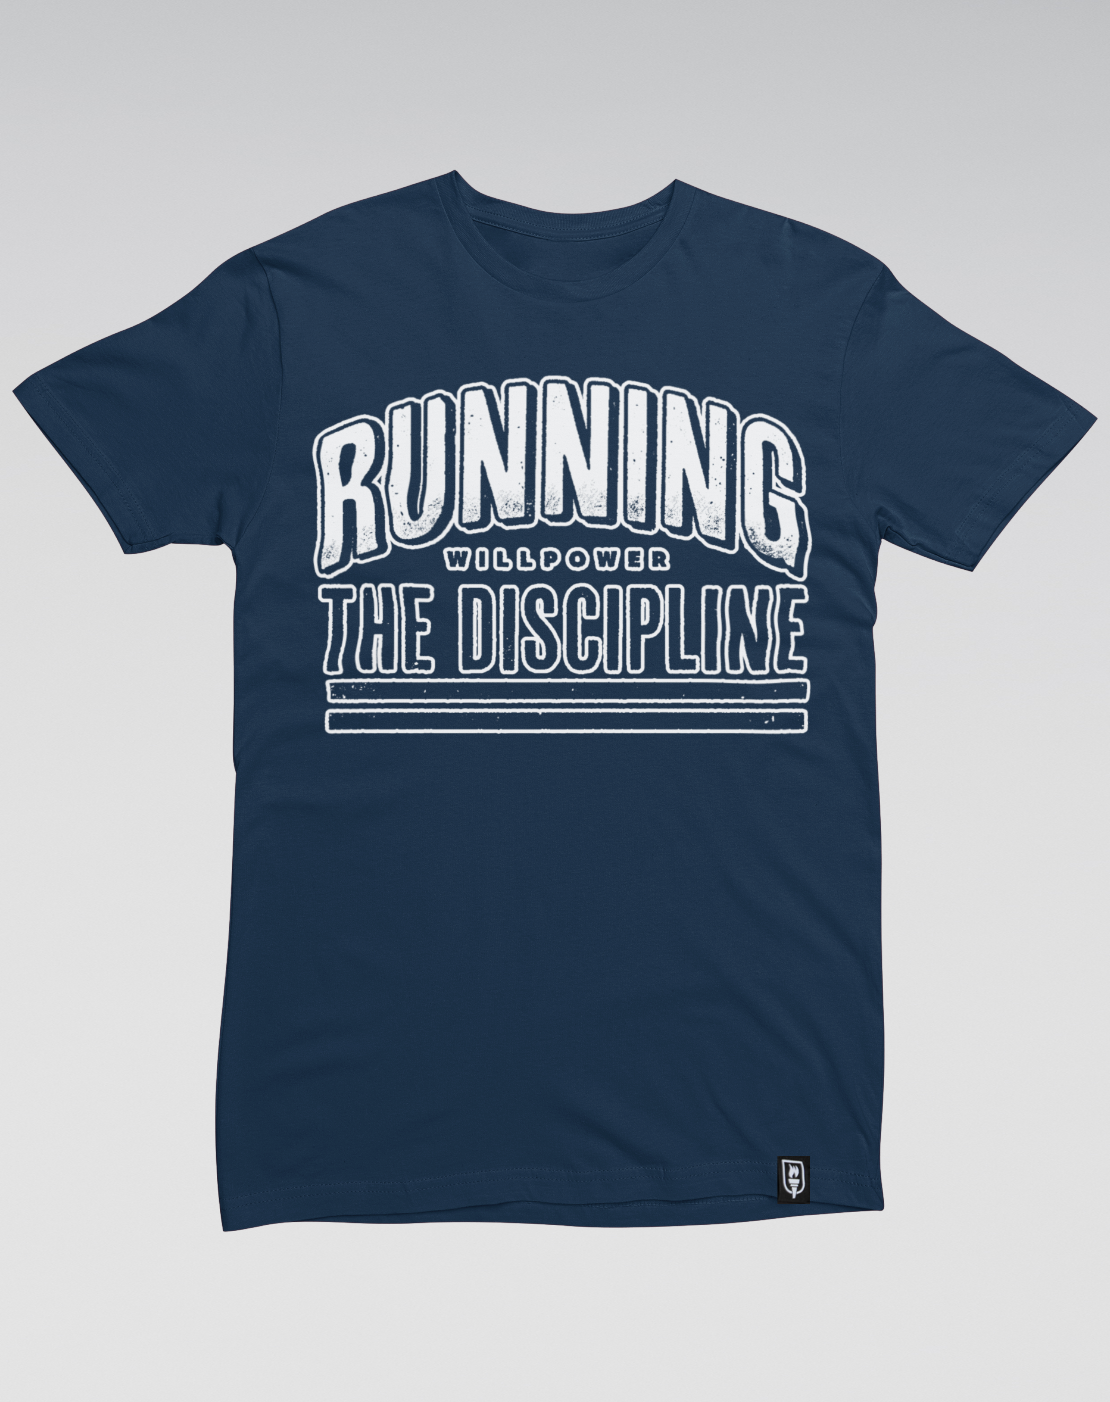 YoungLA - Discipline Shirts. Next week. Discipline is